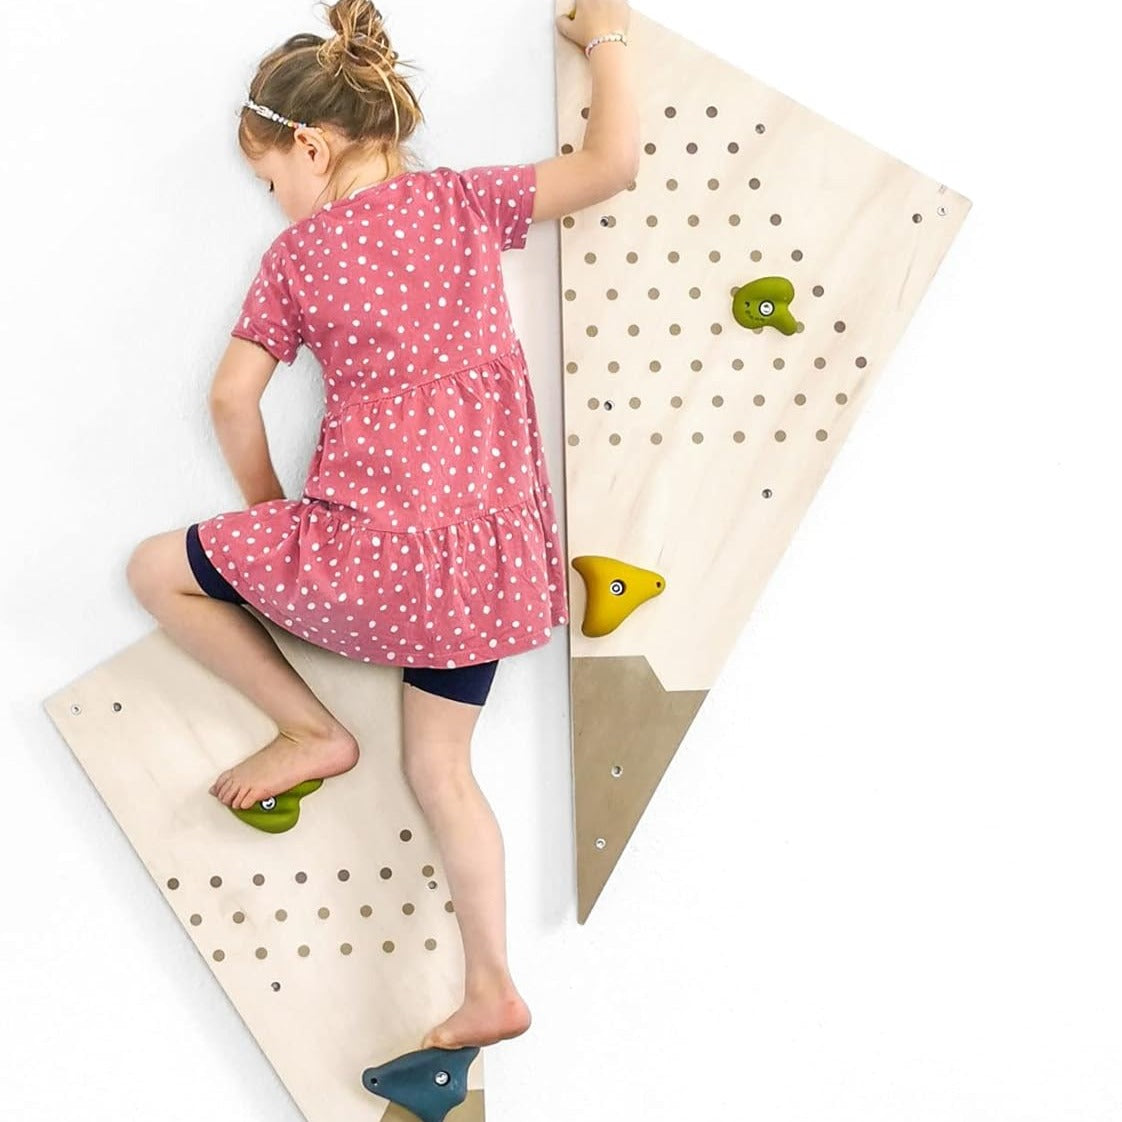 Small Foot: A wooden climbing wall Adventure